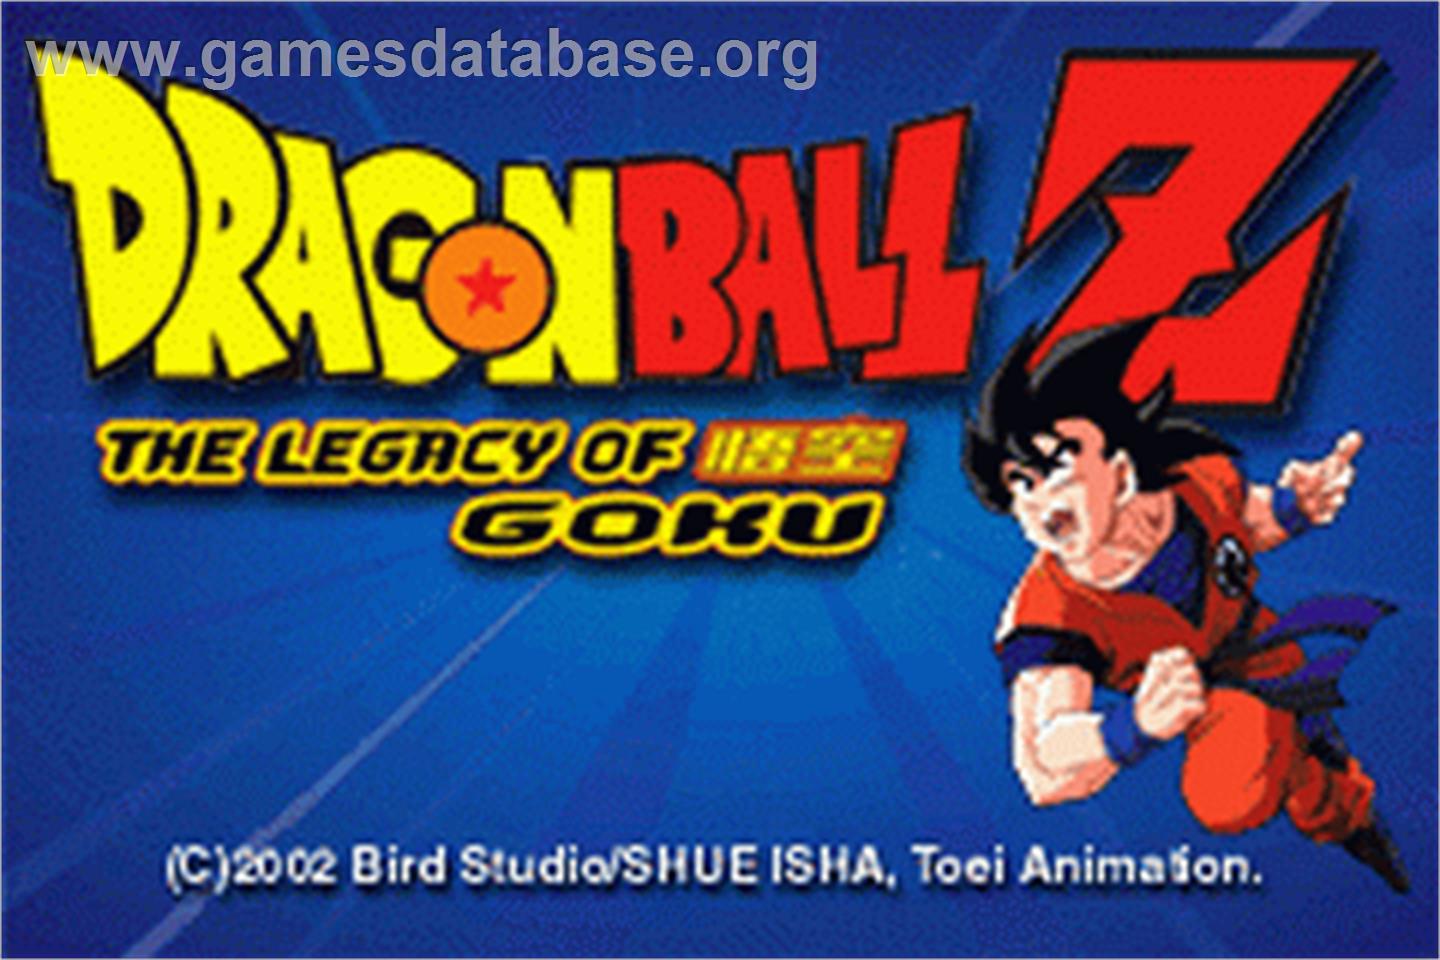 Dragonball Z: The Legacy of Goku - Nintendo Game Boy Advance - Artwork - Title Screen